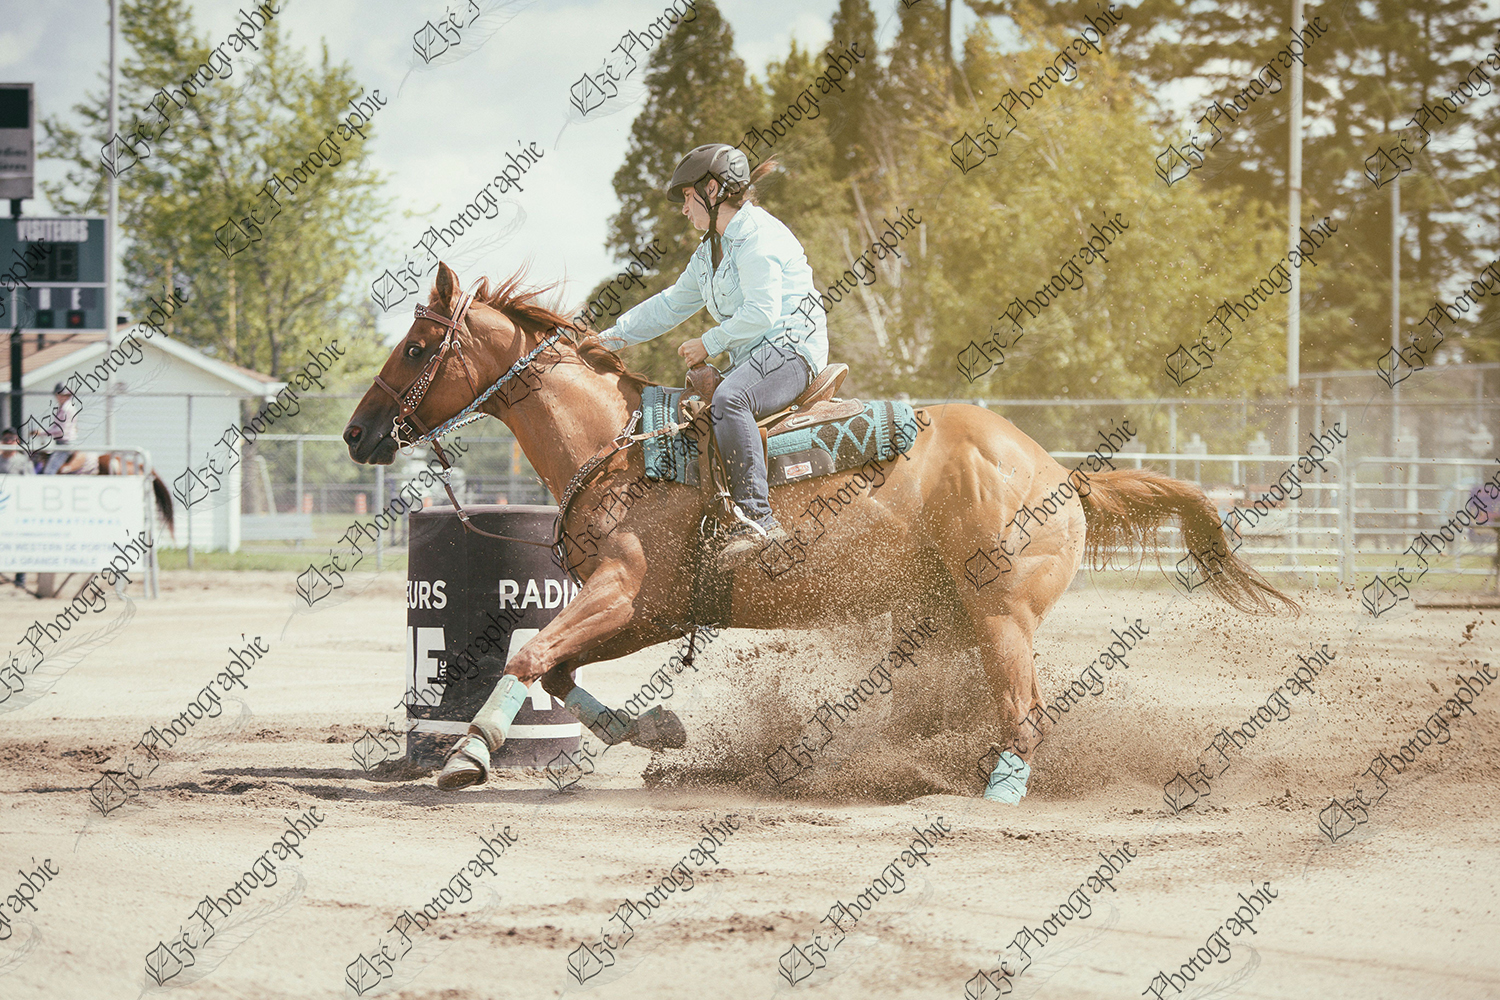 elze_photo_7617_cheval_sport_equestre_gymkhana_competition_horse